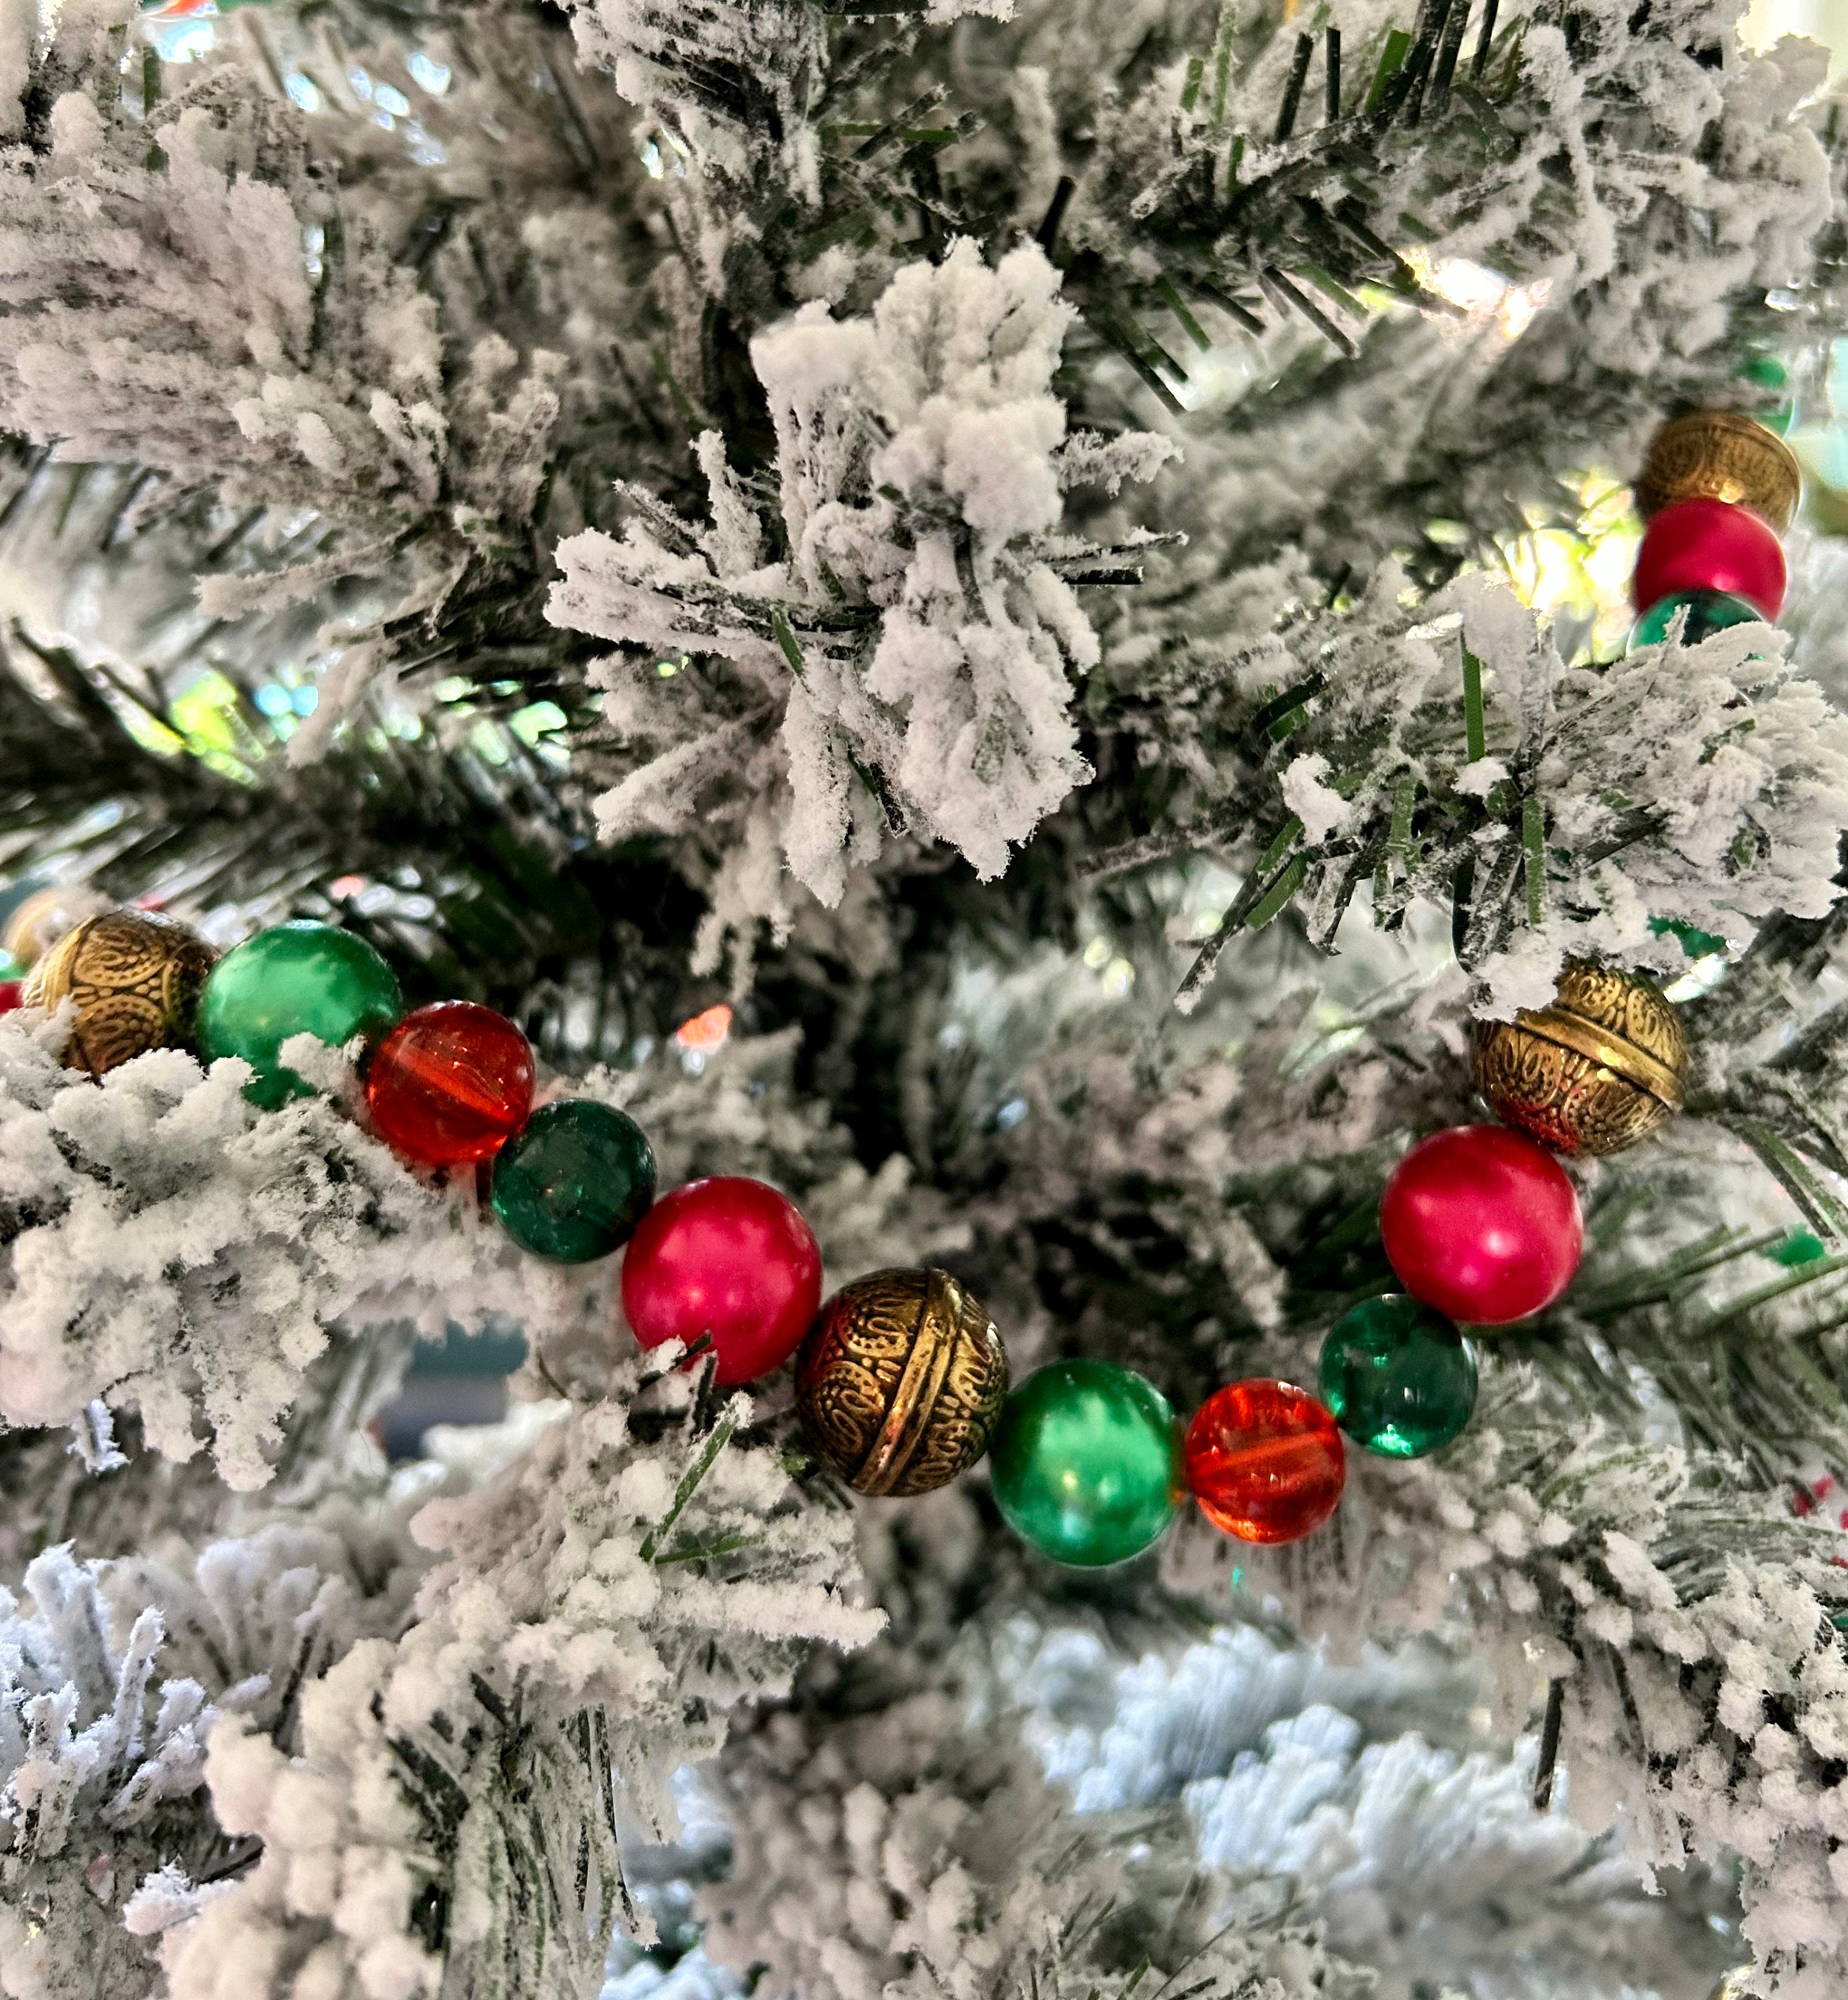 LONGRV 2 Pcs Christmas bead garland, Xmas Tree Beads Faux Beaded Garland  for Christmas Tree,Fireplace Mantel Railing Decoration (Gold&White) 